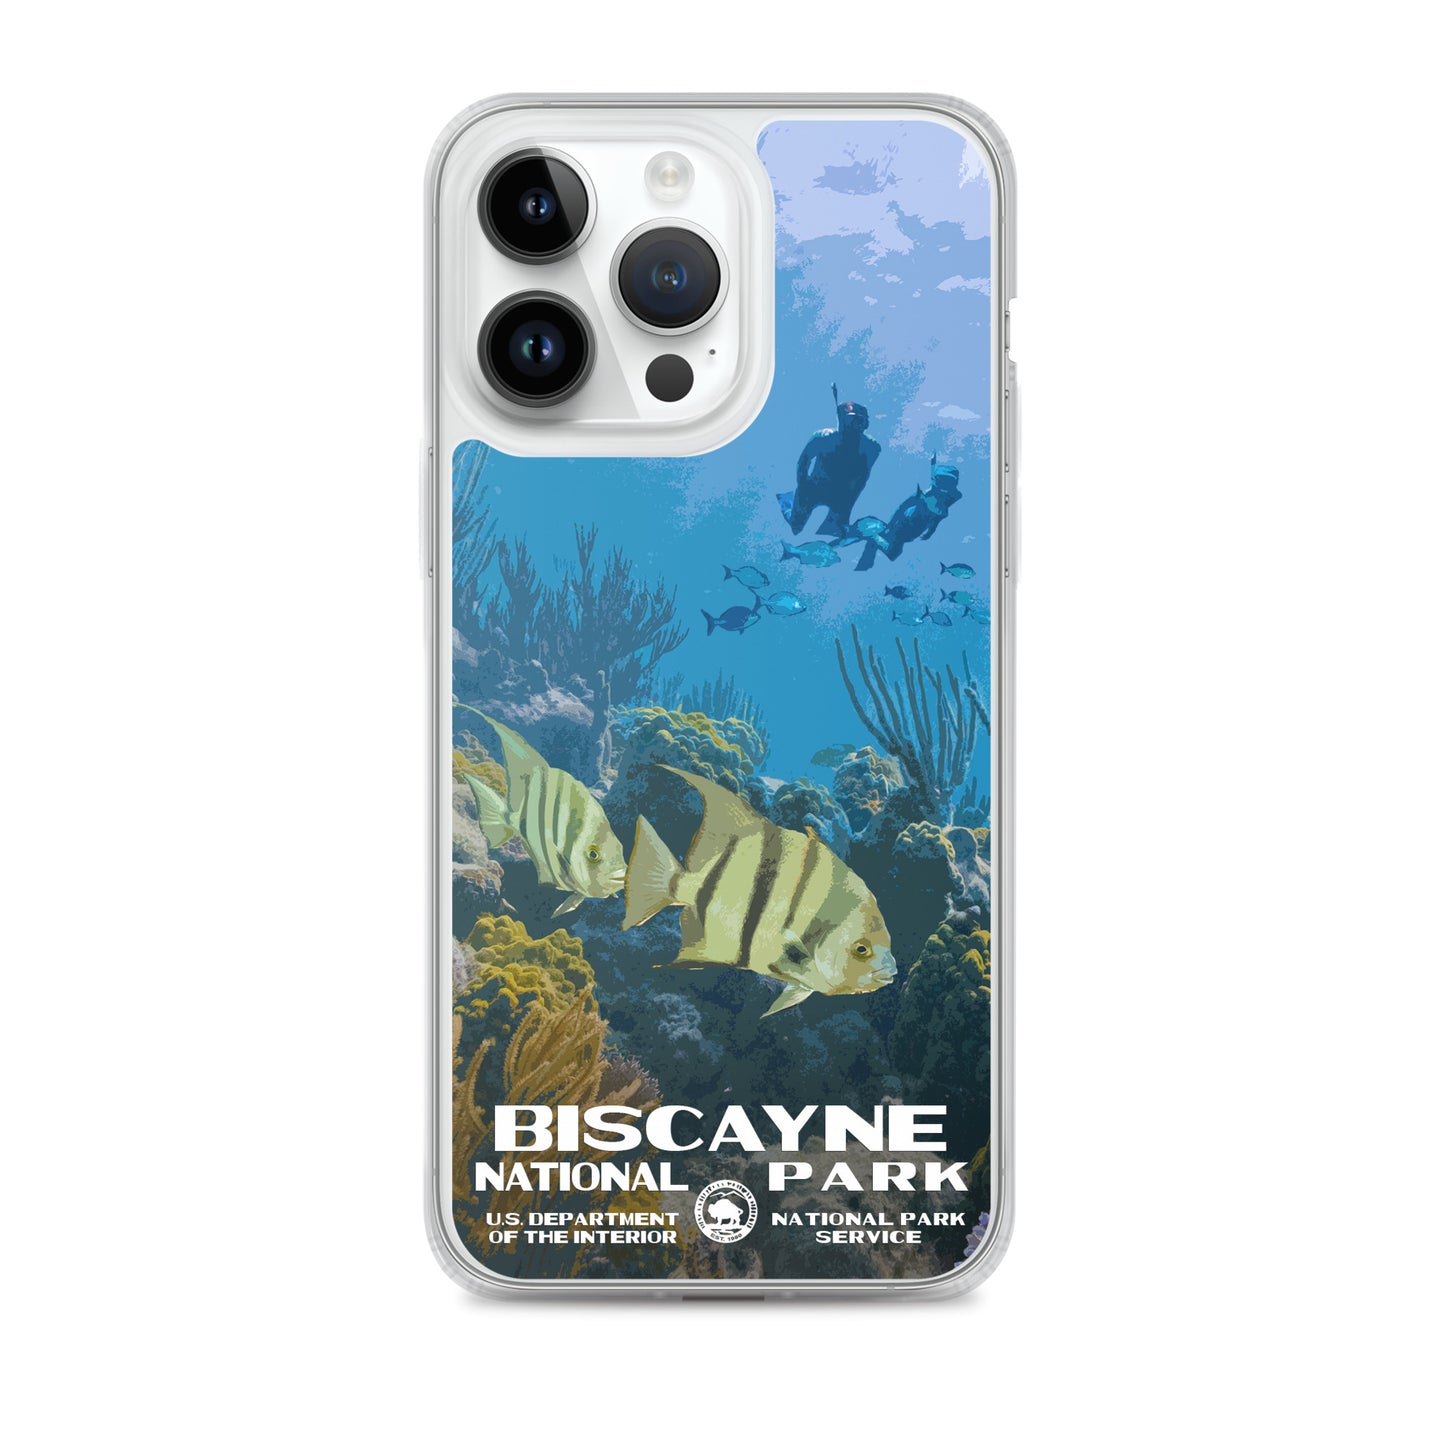 Biscayne National Park iPhone® Case